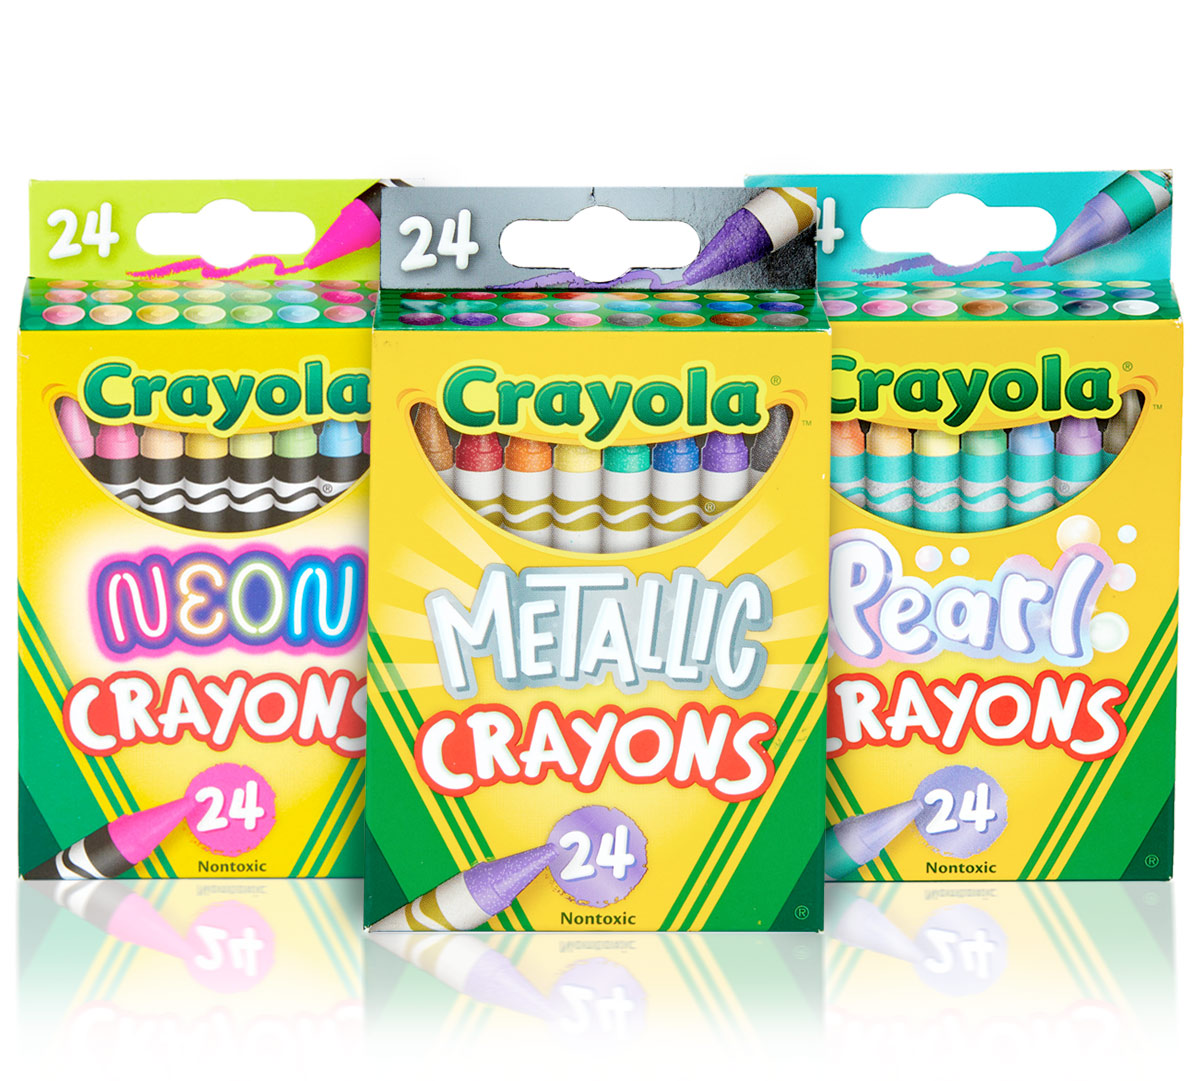 72 Crayon Set, Metallic, Pearl & Neon Crayons | Crayola.com | Crayola